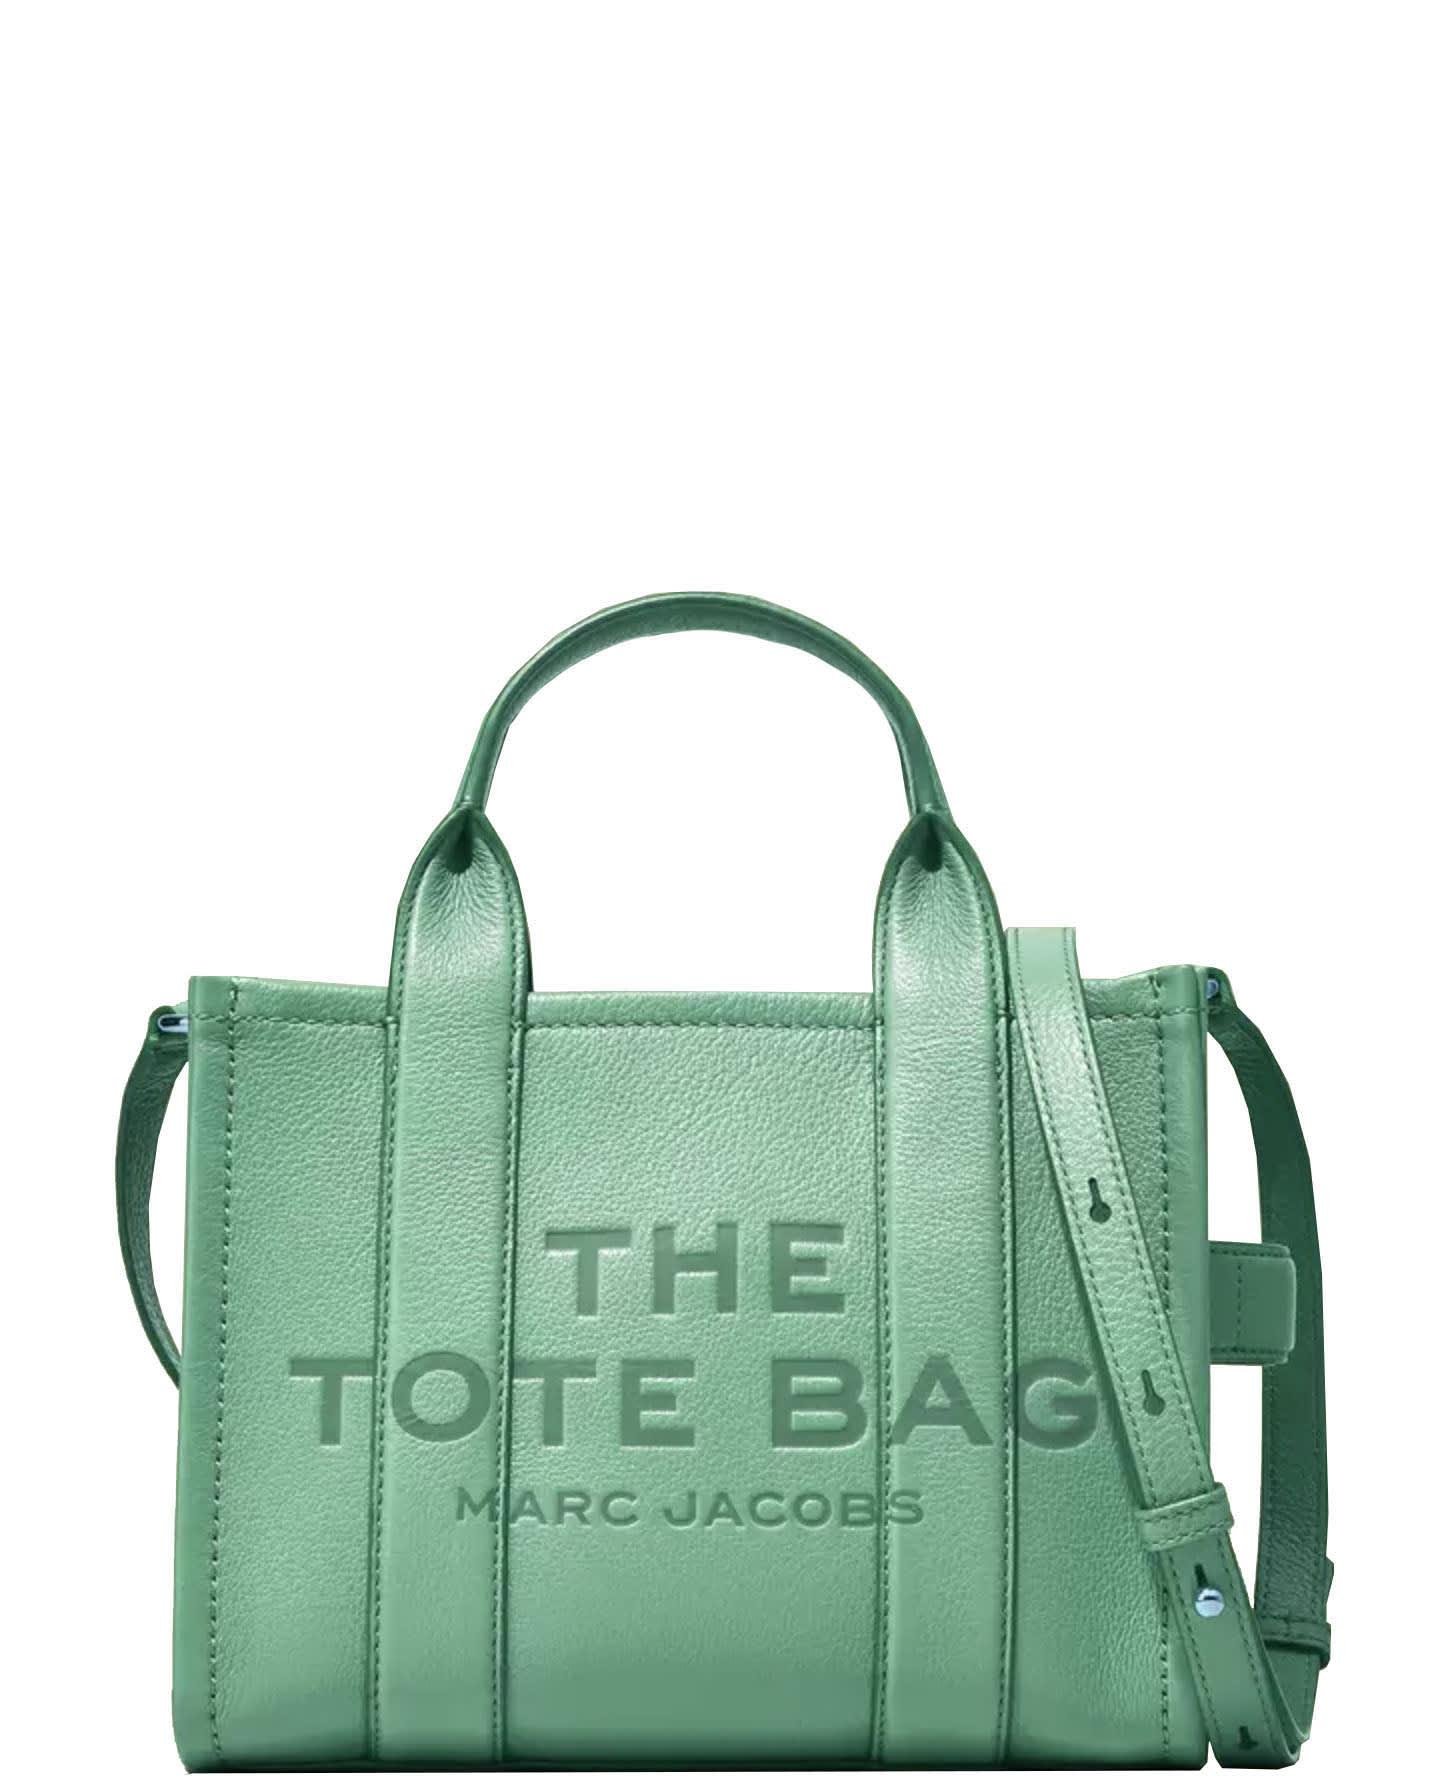 marc jacobs green bag